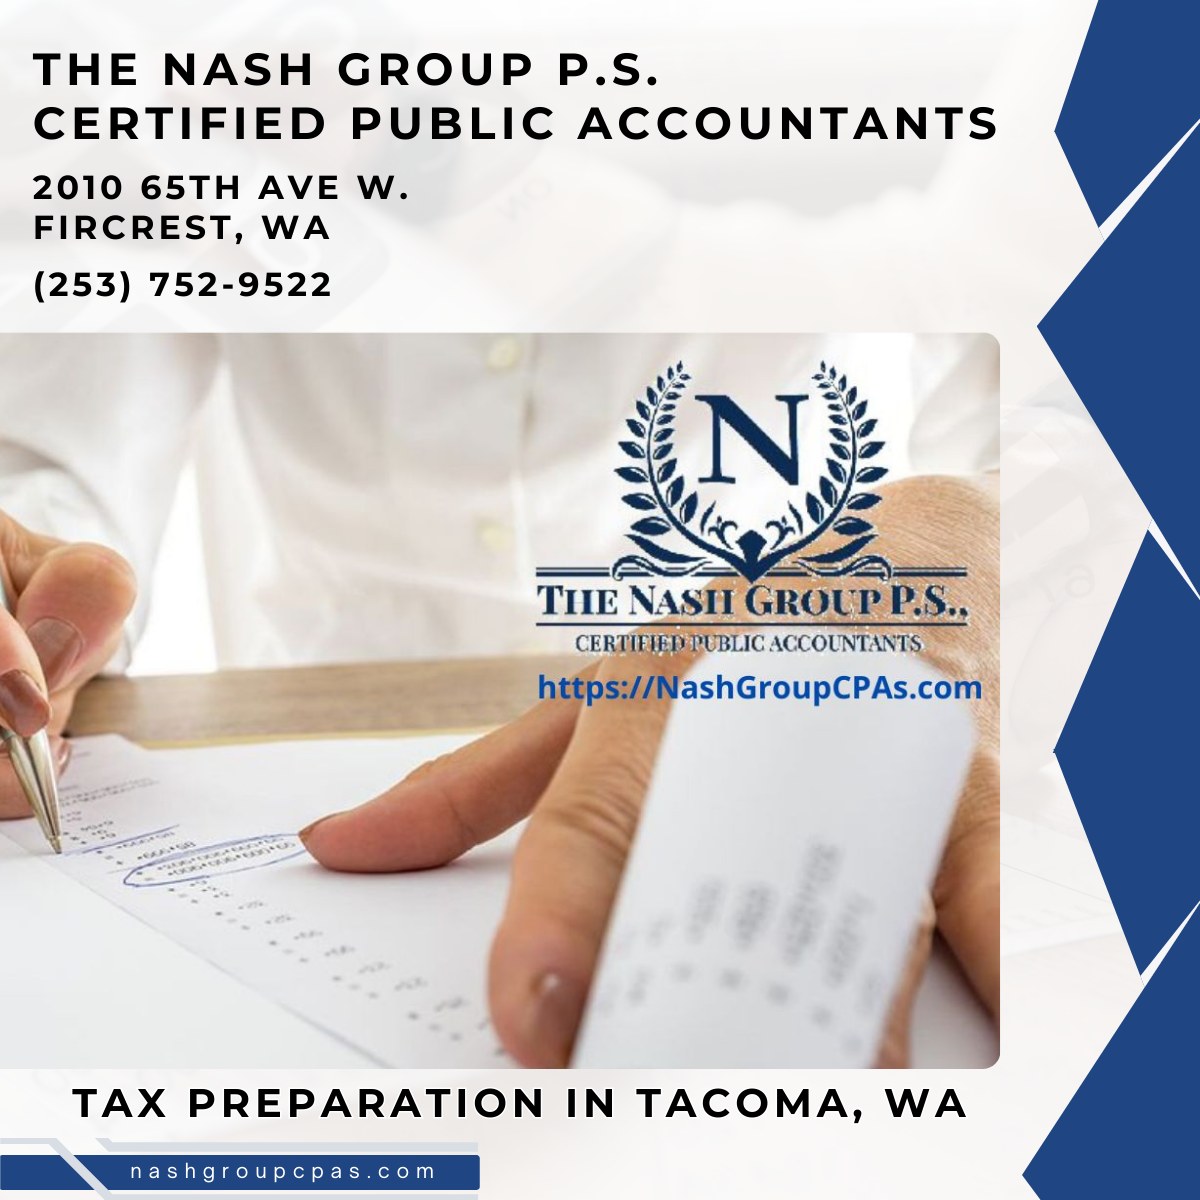 Tax Preparation in Tacoma, WA - The Nash Group P.S., Certified Public Accountants.

nashgroupcpas.com/tax-preparatio…

The Nash Group P.S., Certified Public Accountants
2010 65th Ave W.
Fircrest, WA 98466
(253) 752-9522

maps.google.com/maps?ll=47.241…

#TaxPreparation #TaxPreparationTacomaWA